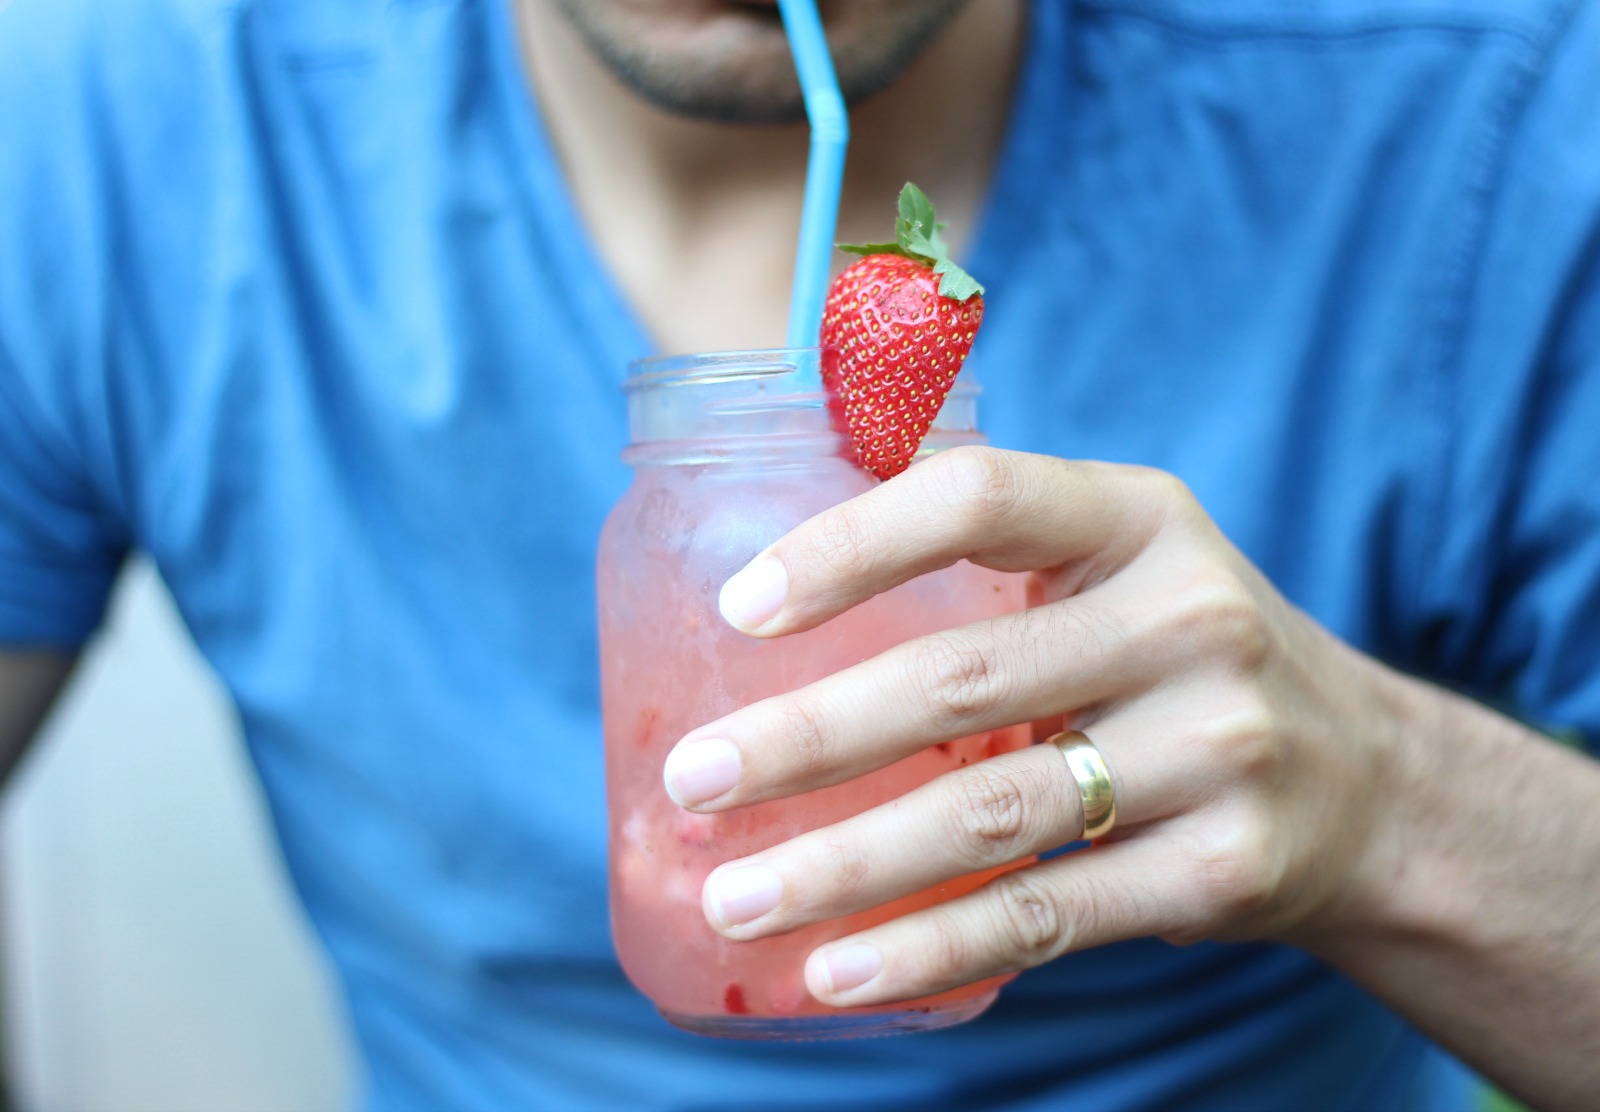 spiked strawberry lemonade